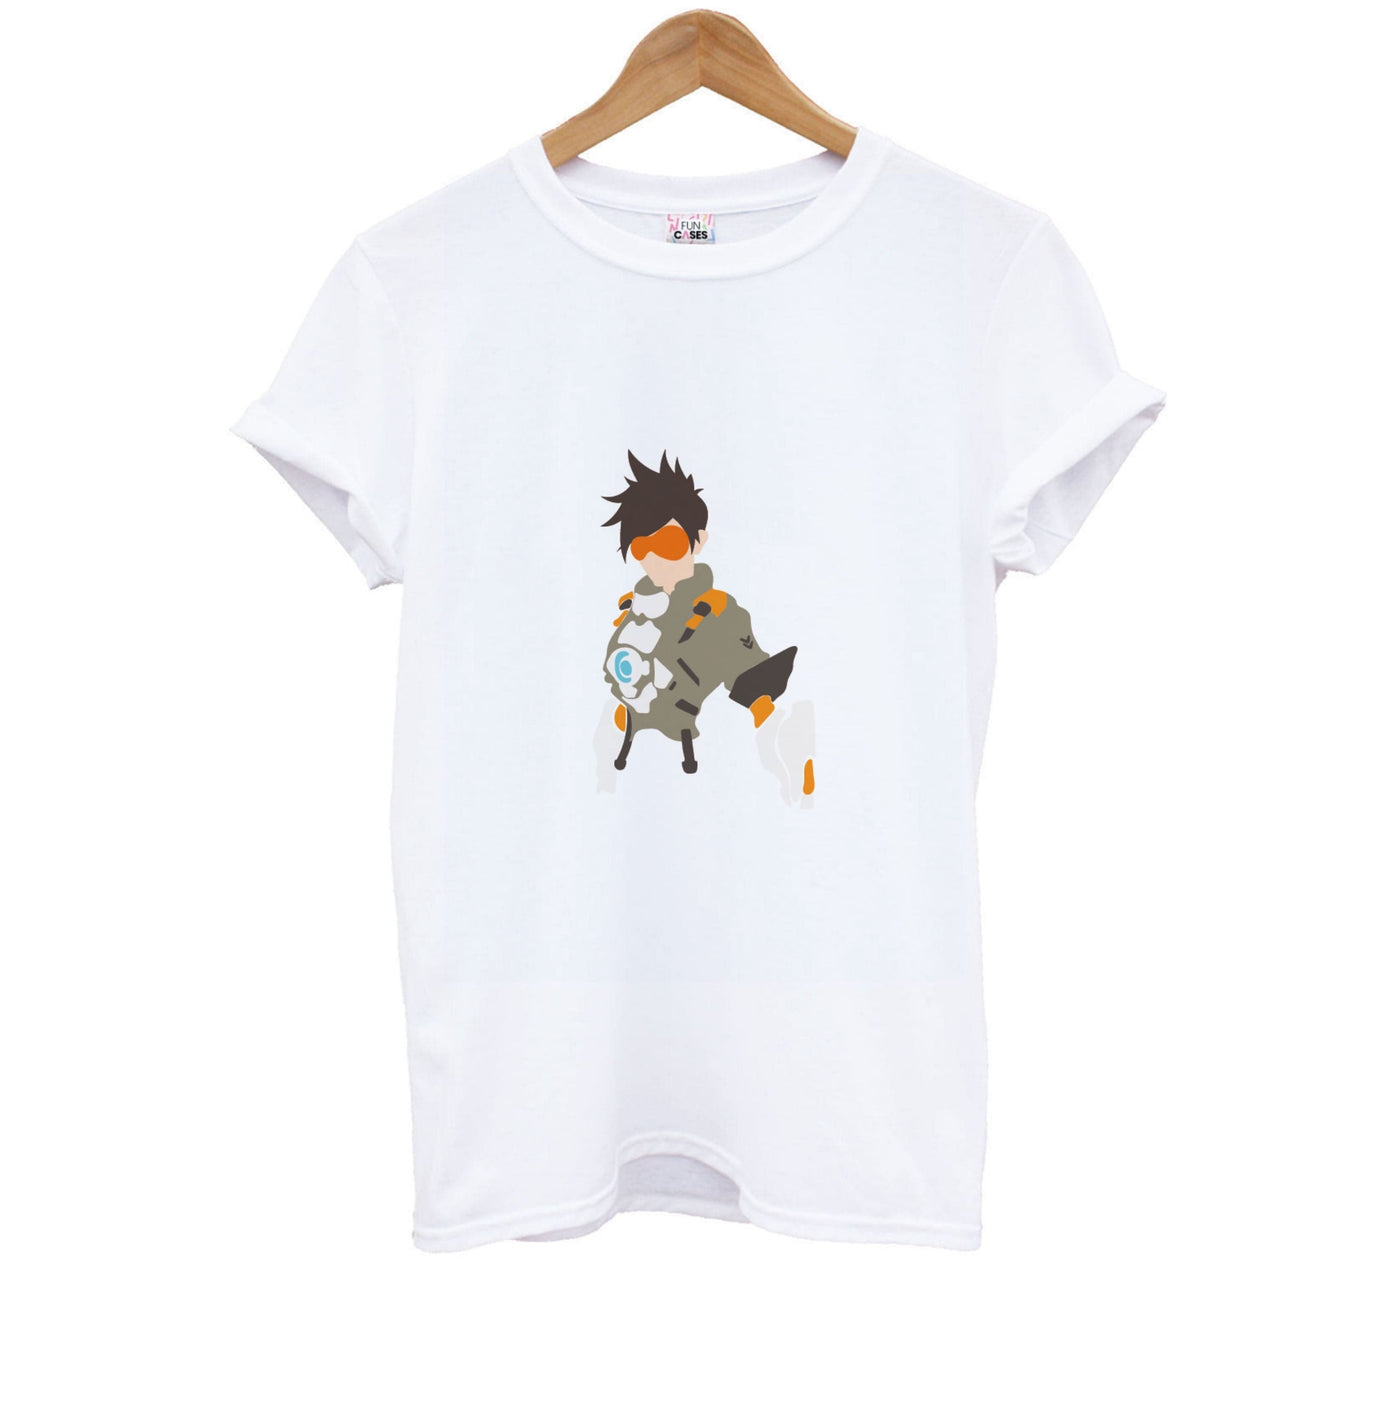 Tracer - Overwatch Kids T-Shirt